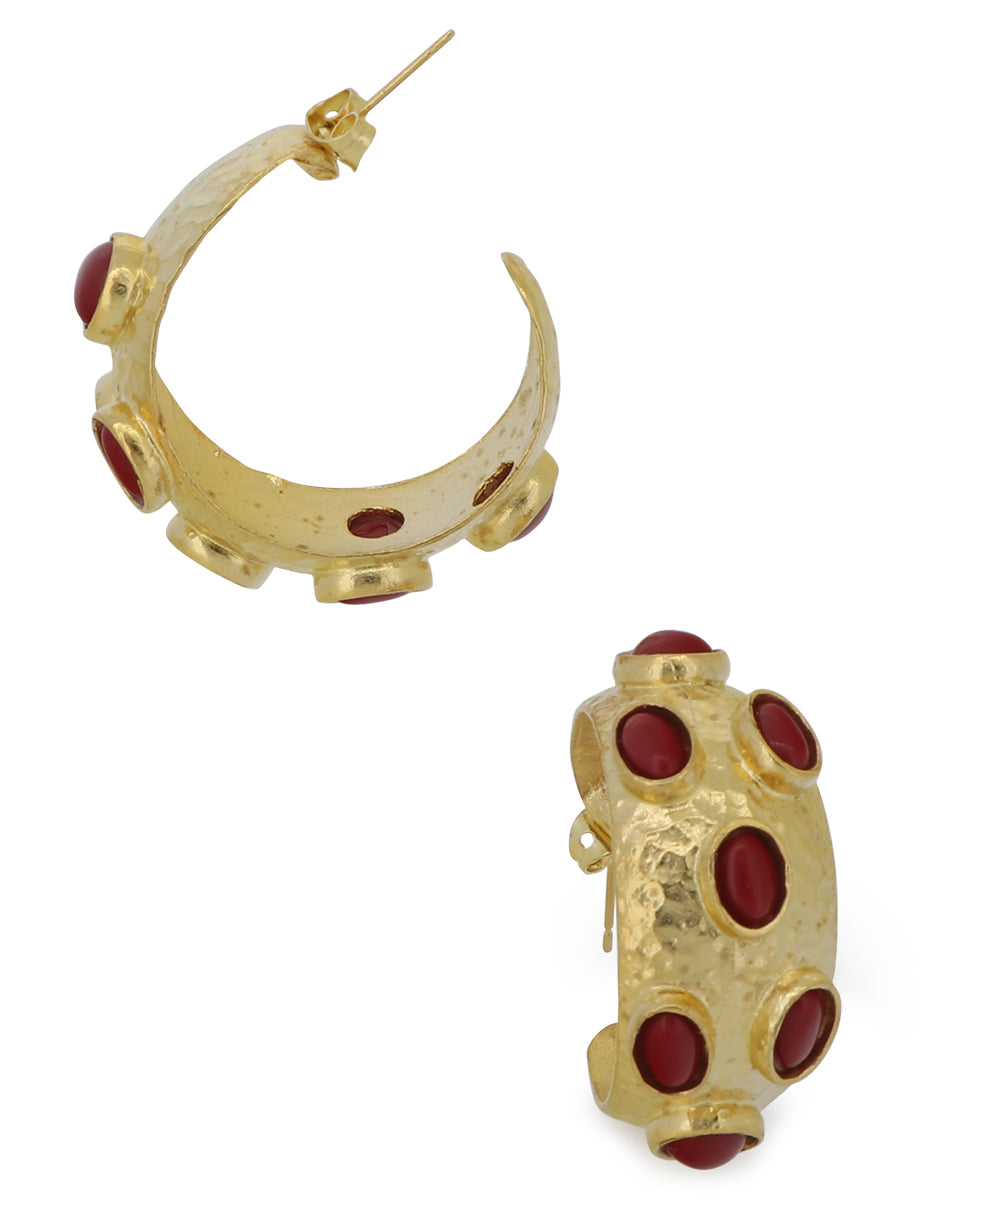 Elegant gold plated brass hoop earrings, showcasing the beautifully embedded agate stones and wide hoop design